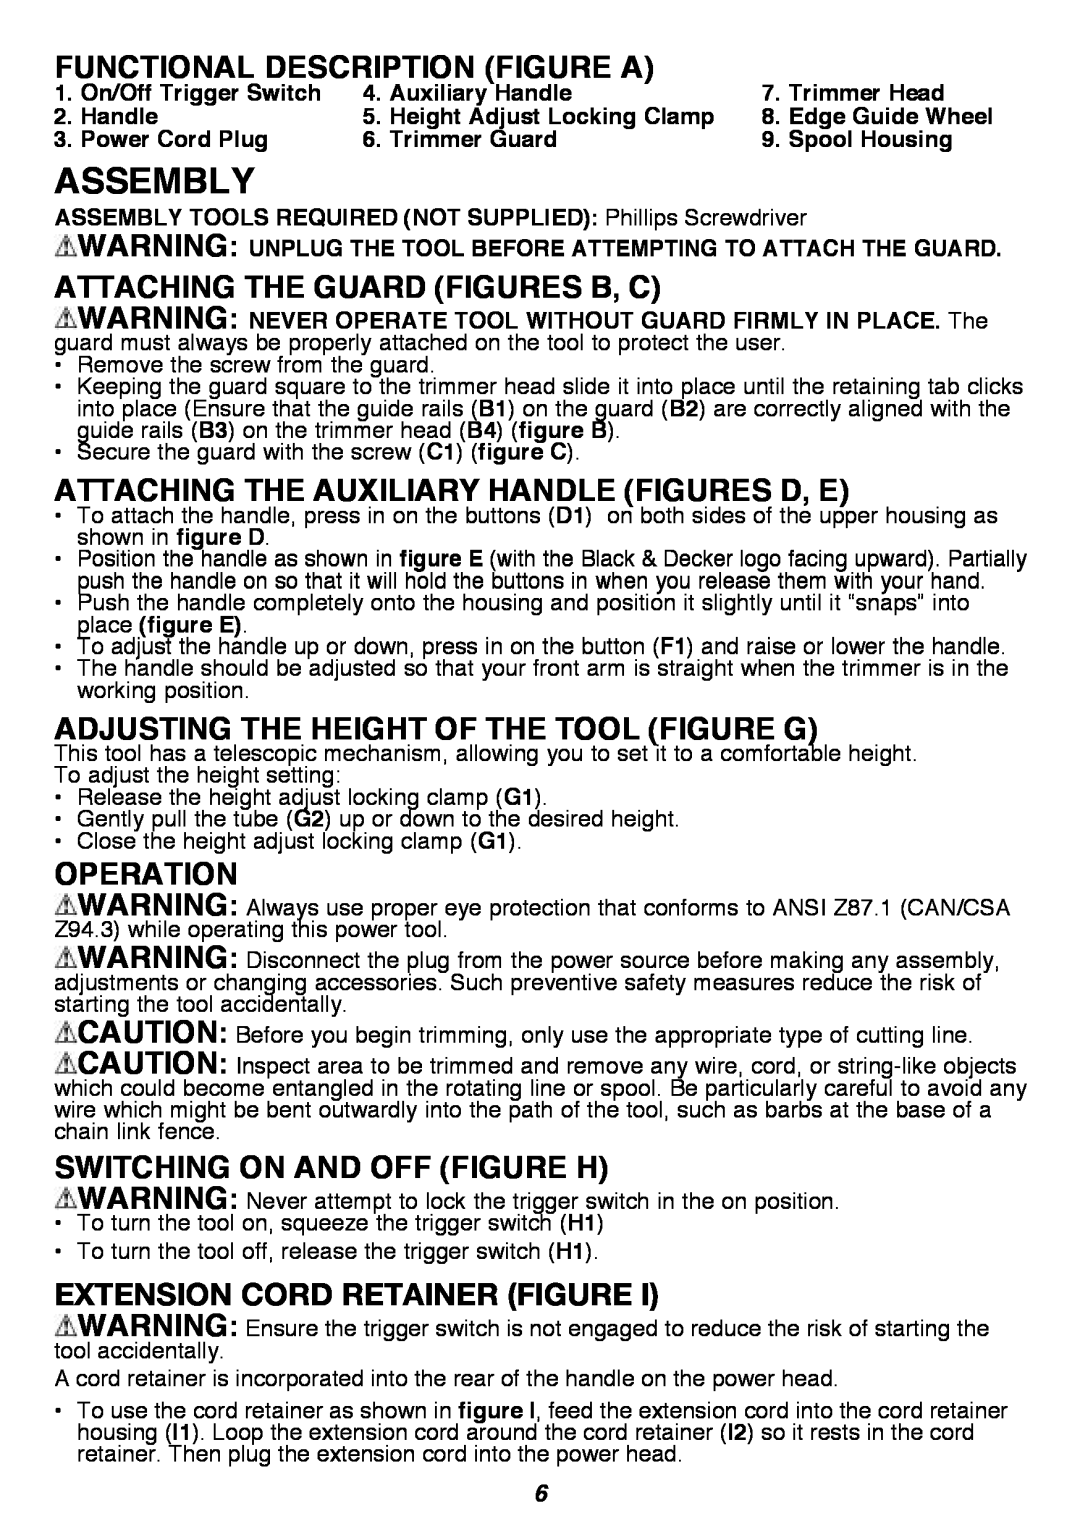 Black & Decker SF-080 Assembly, FUNCTIONAL DESCRIPTION figure A, Attaching the guard Figures B, C, Operation 